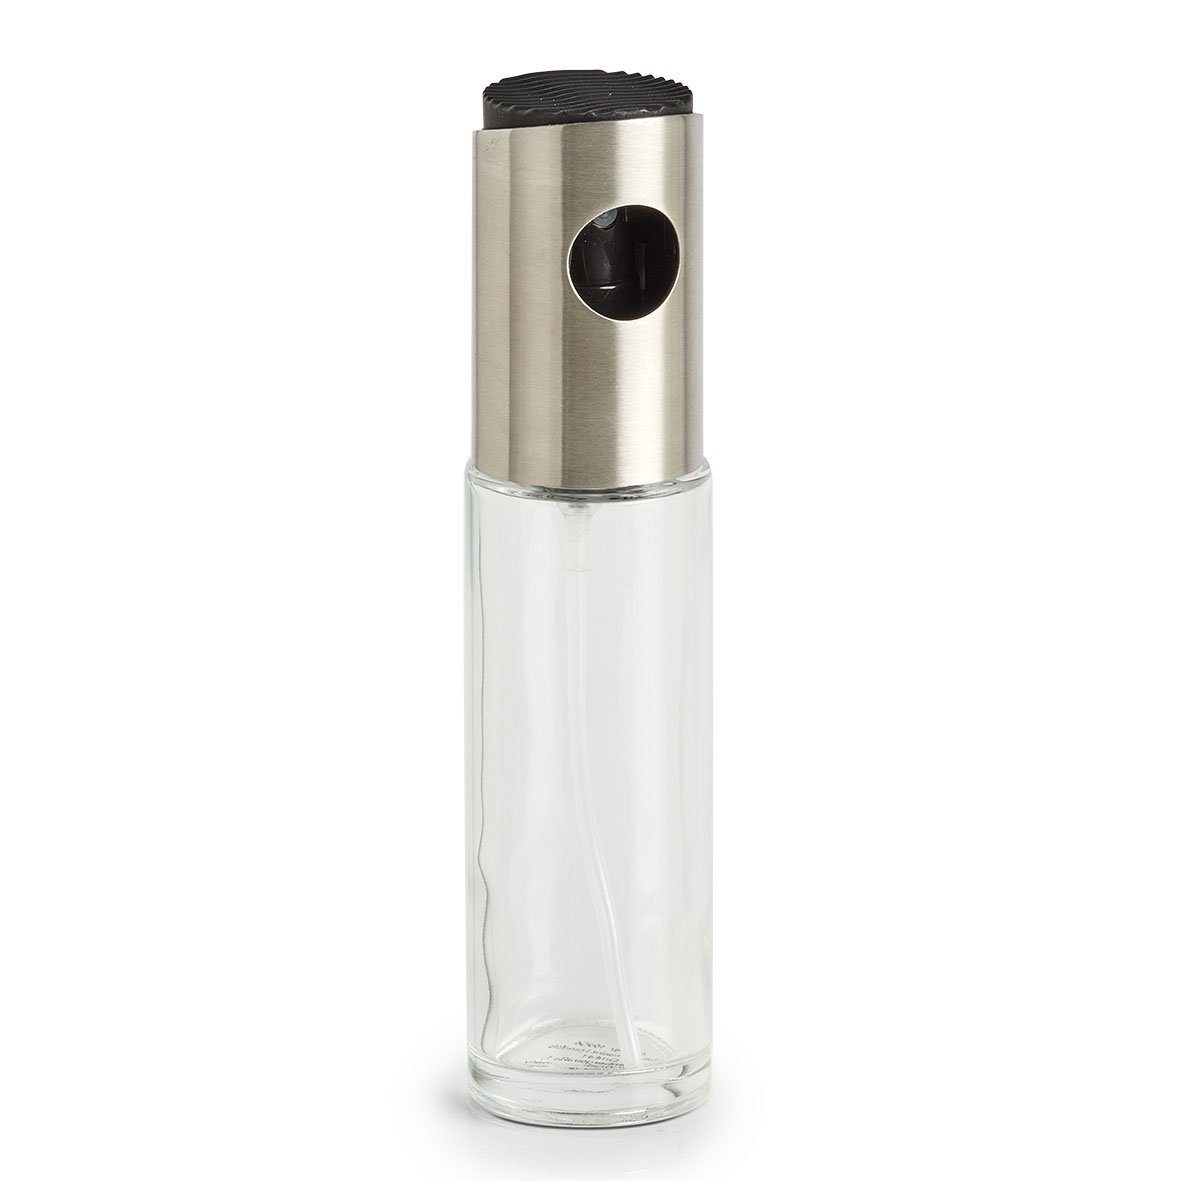 Zeller Present Ölspender Essig-/Öl-Sprüher, 100 ml, Glas/Edelstahl